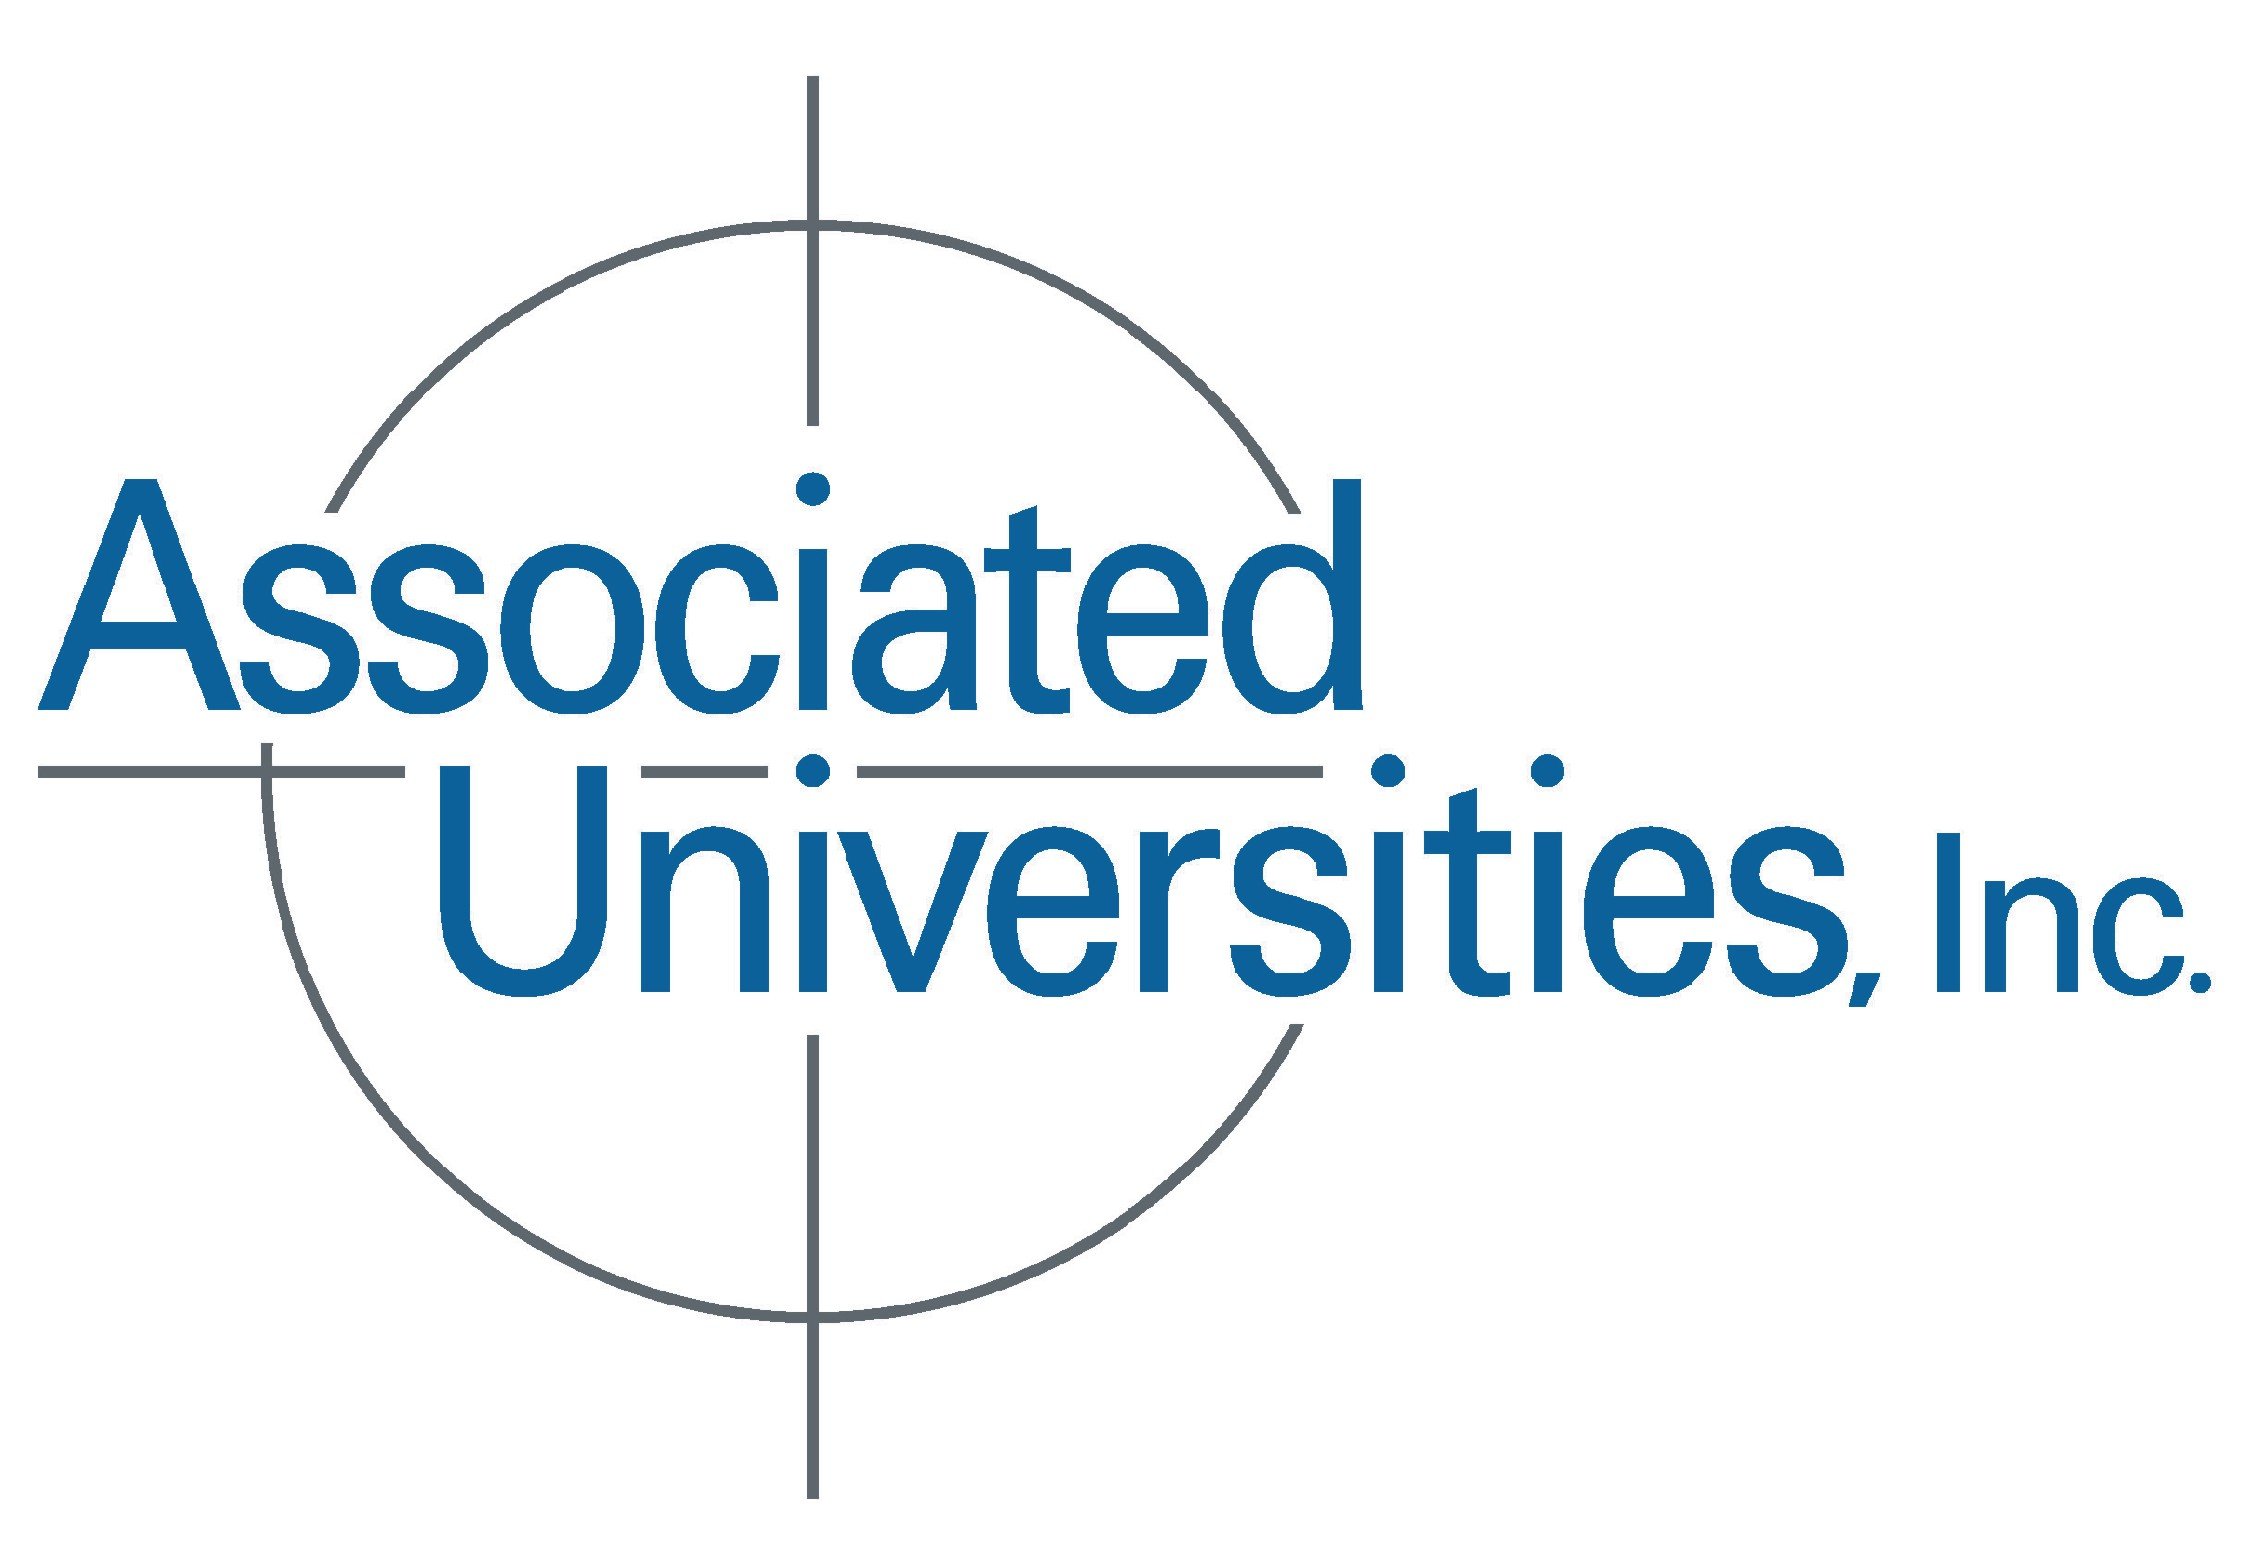 Associated Universities, Inc.